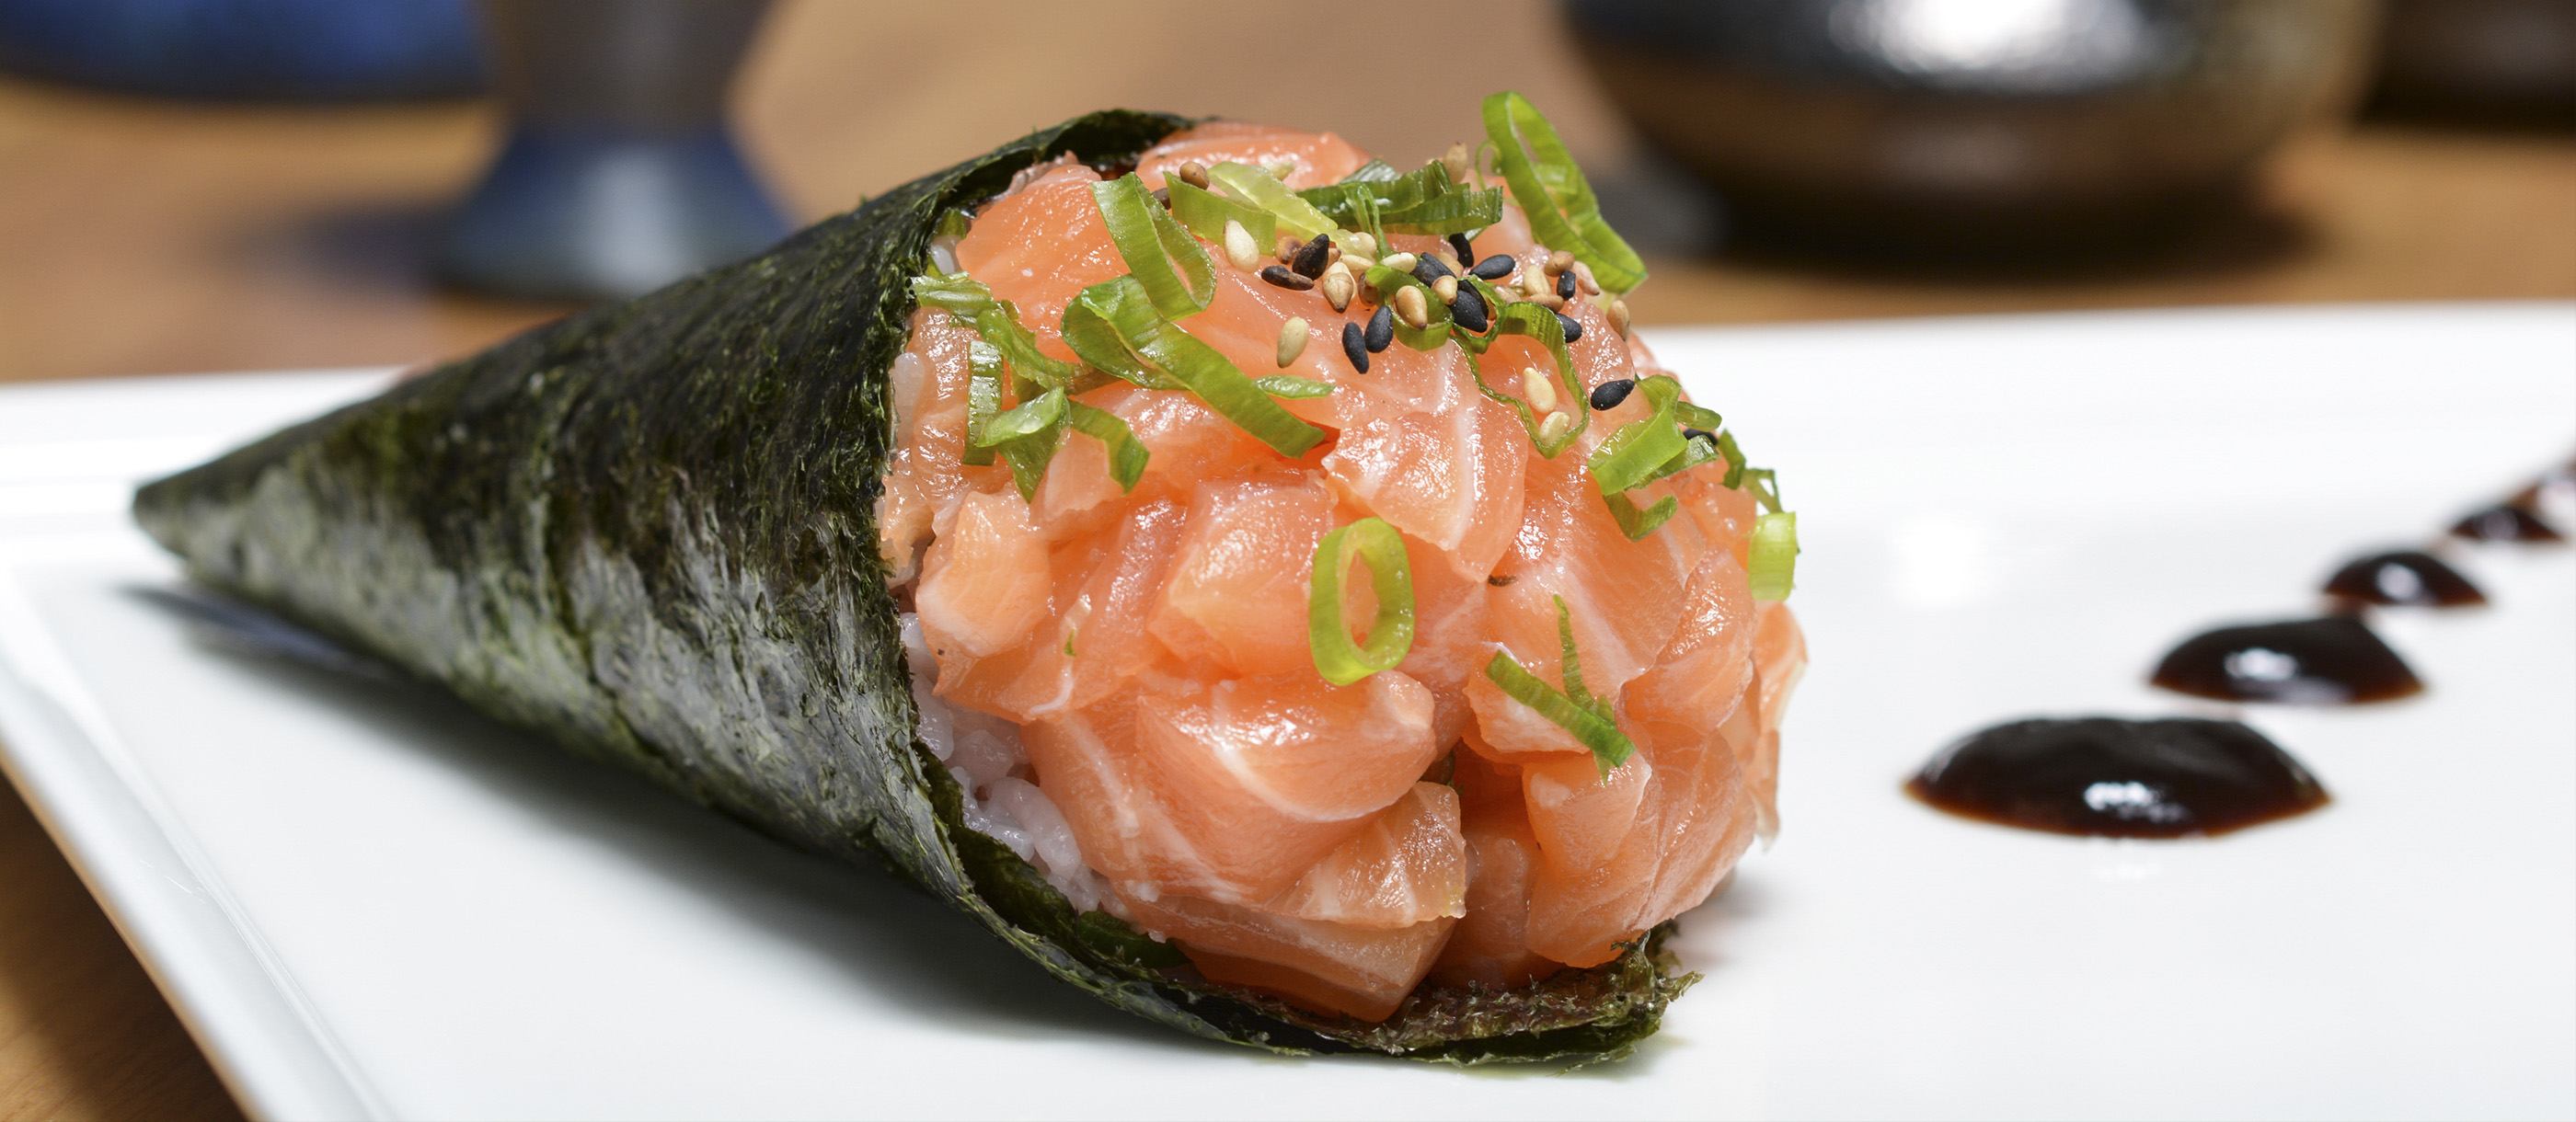 10 Most Popular Japanese Fish Dishes - TasteAtlas